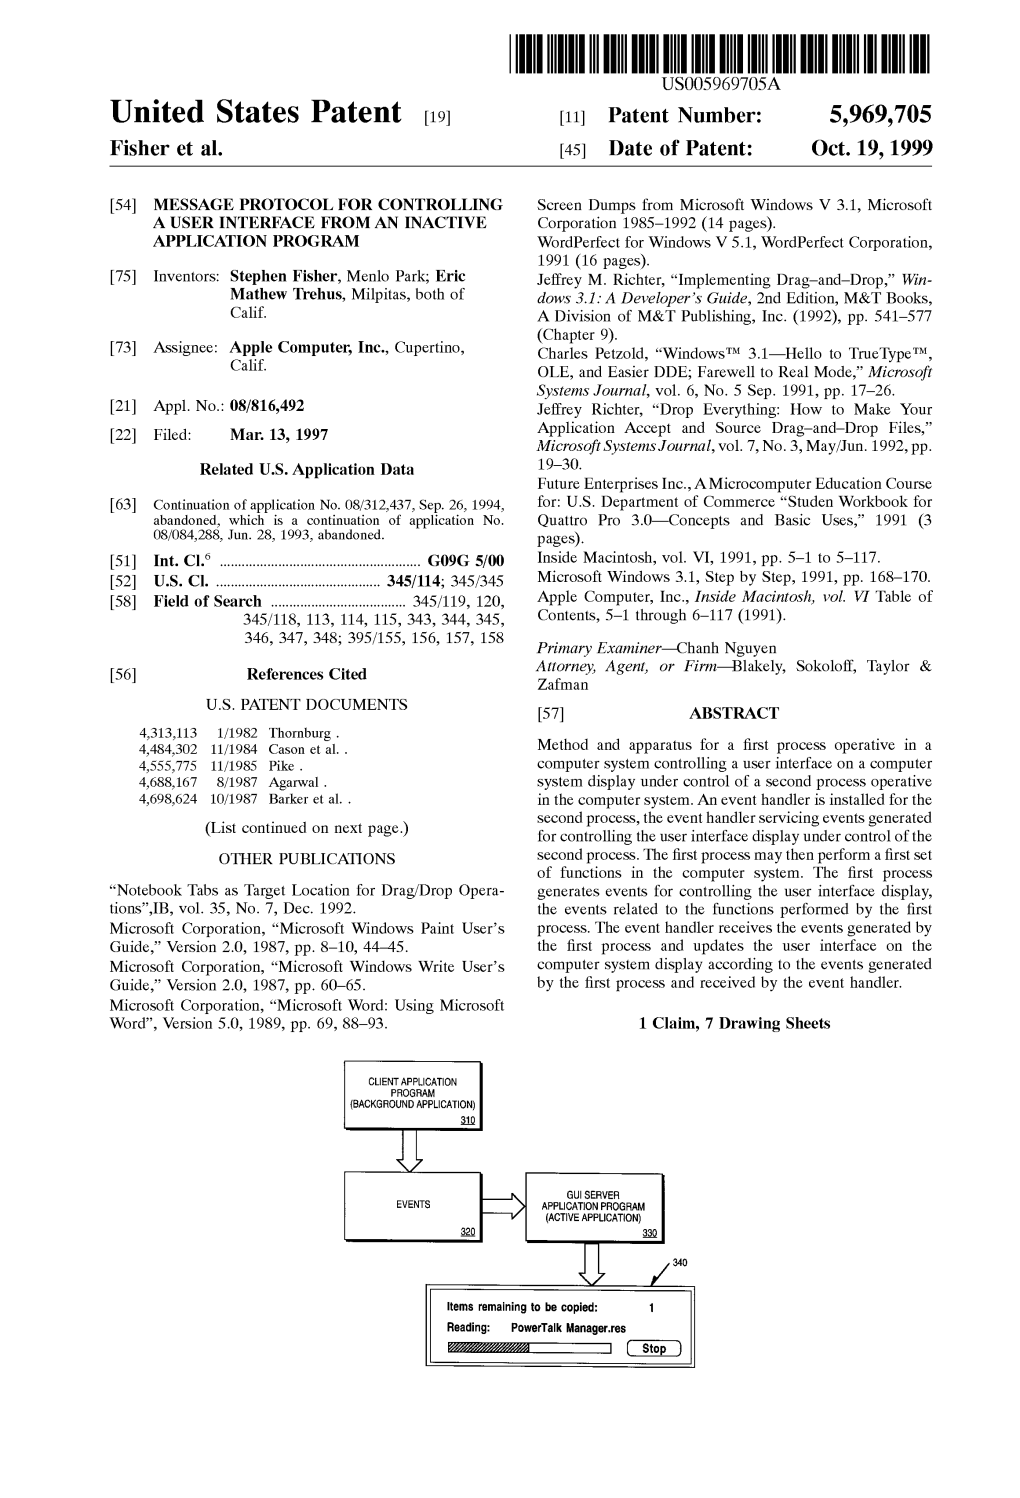 United States Patent (19) 11 Patent Number: 5,969,705 Fisher Et Al